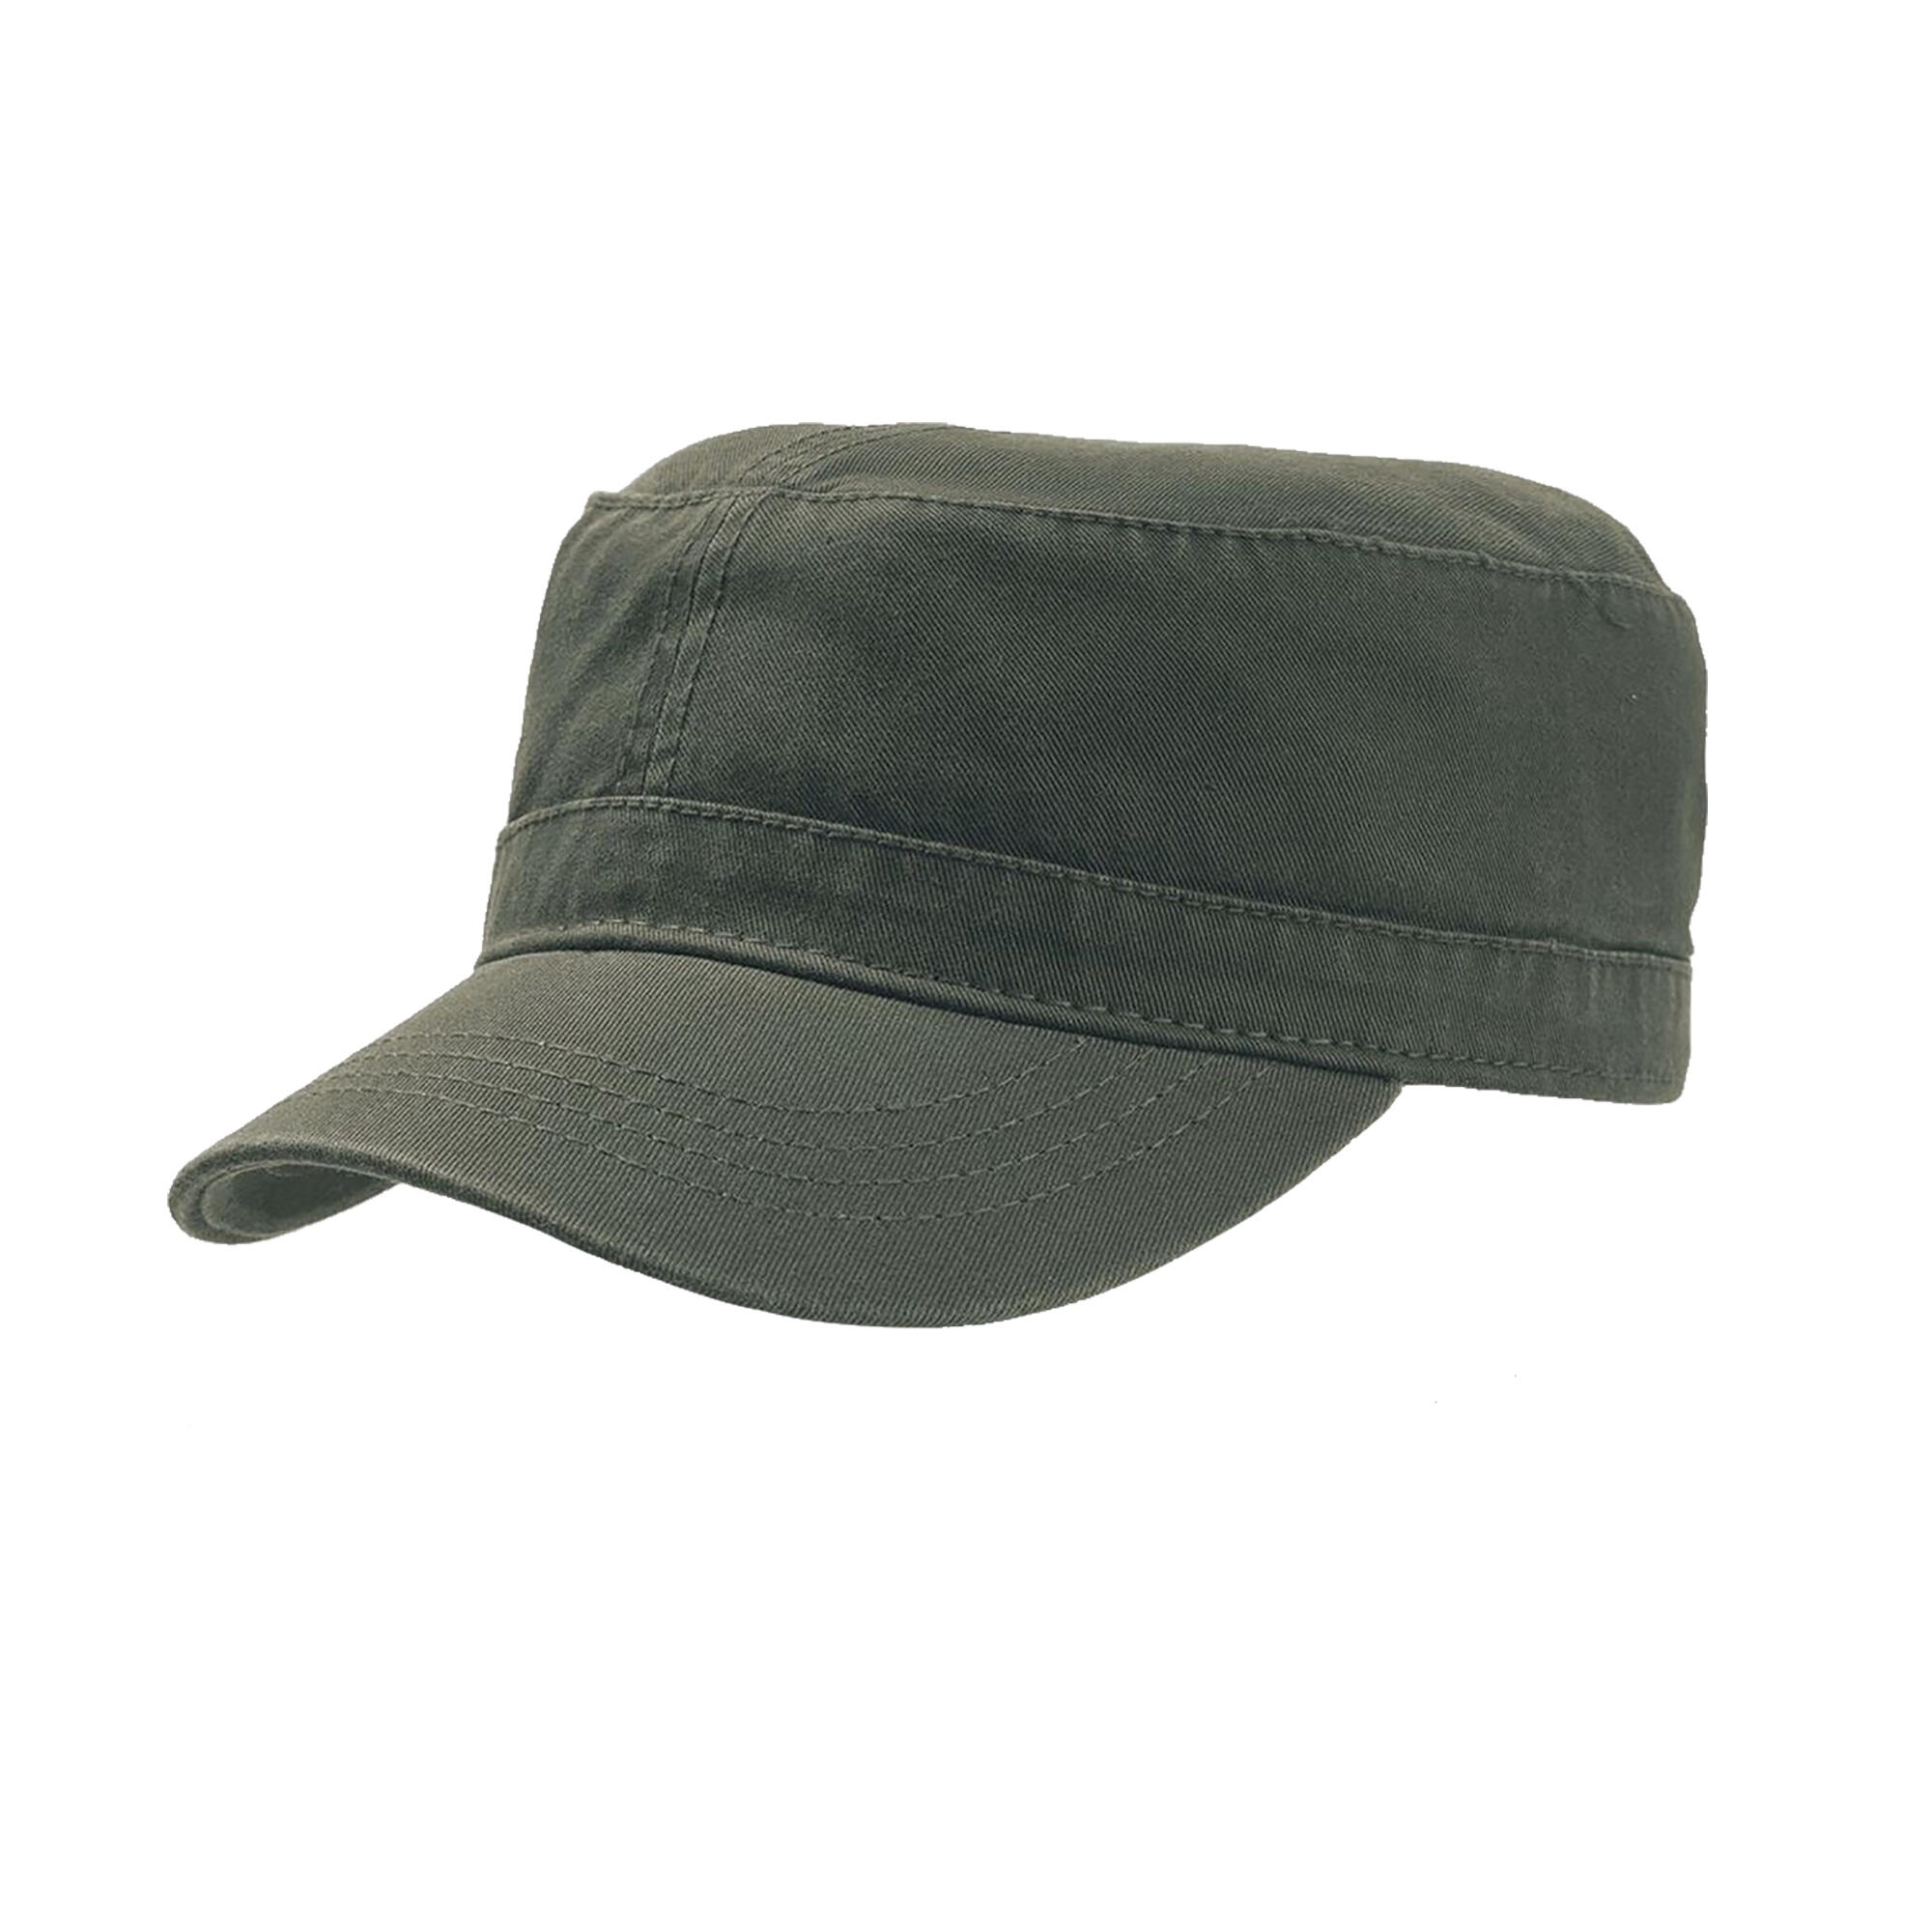 ATLANTIS Chino Cotton Uniform Military Cap (Pack Of 2) (Olive)